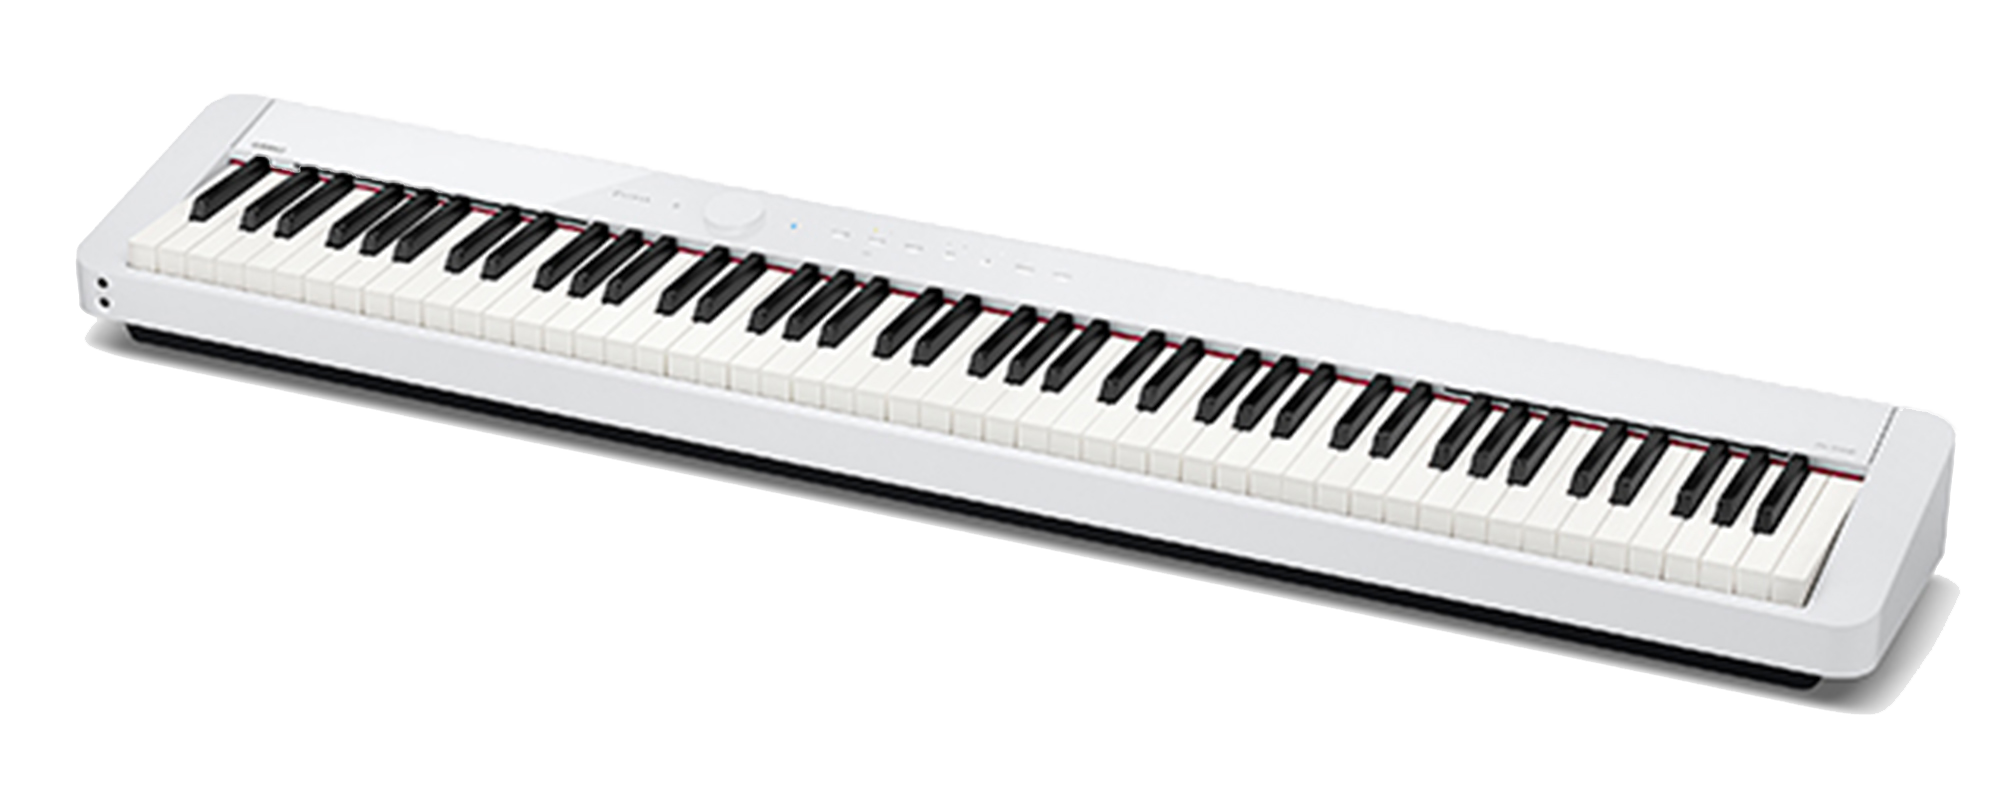 casio px-s1000 white digital piano singapore